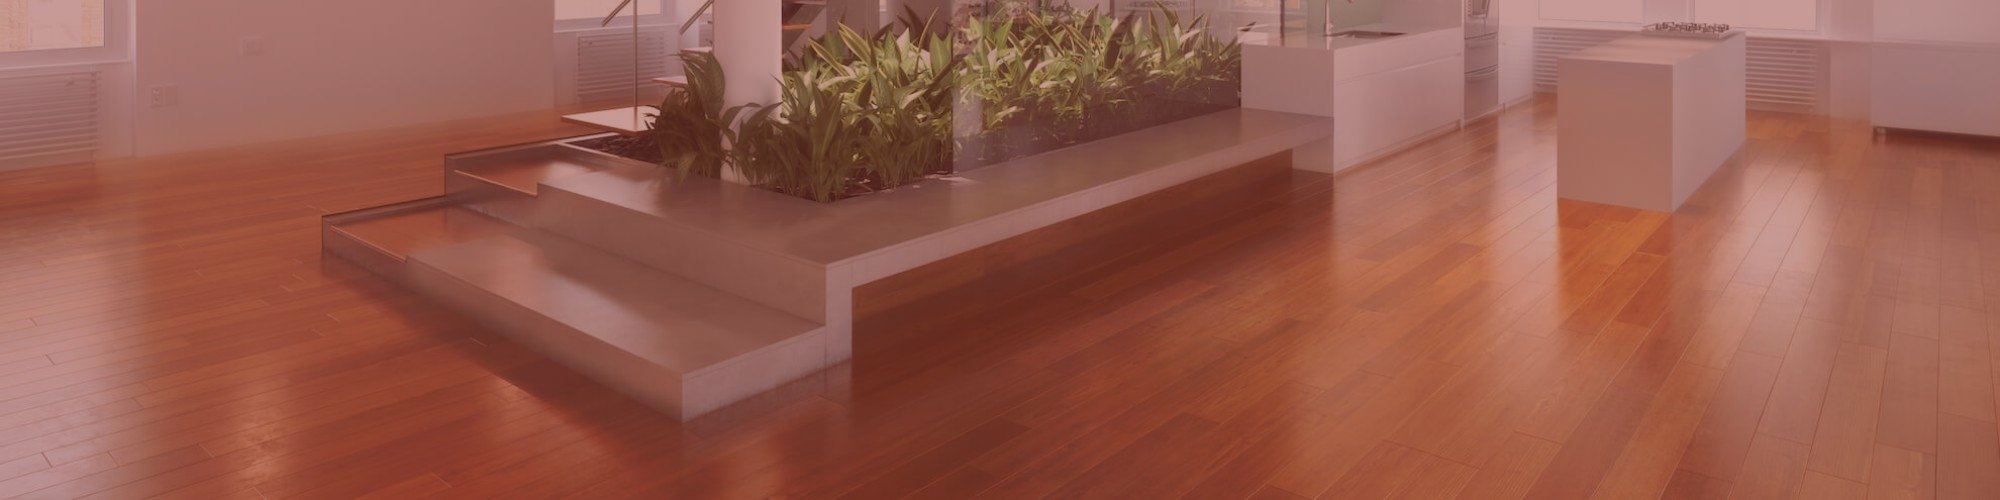 brown hardwood floor for living room provided by Budget Flooring & Shutters in Las Vegas, NV